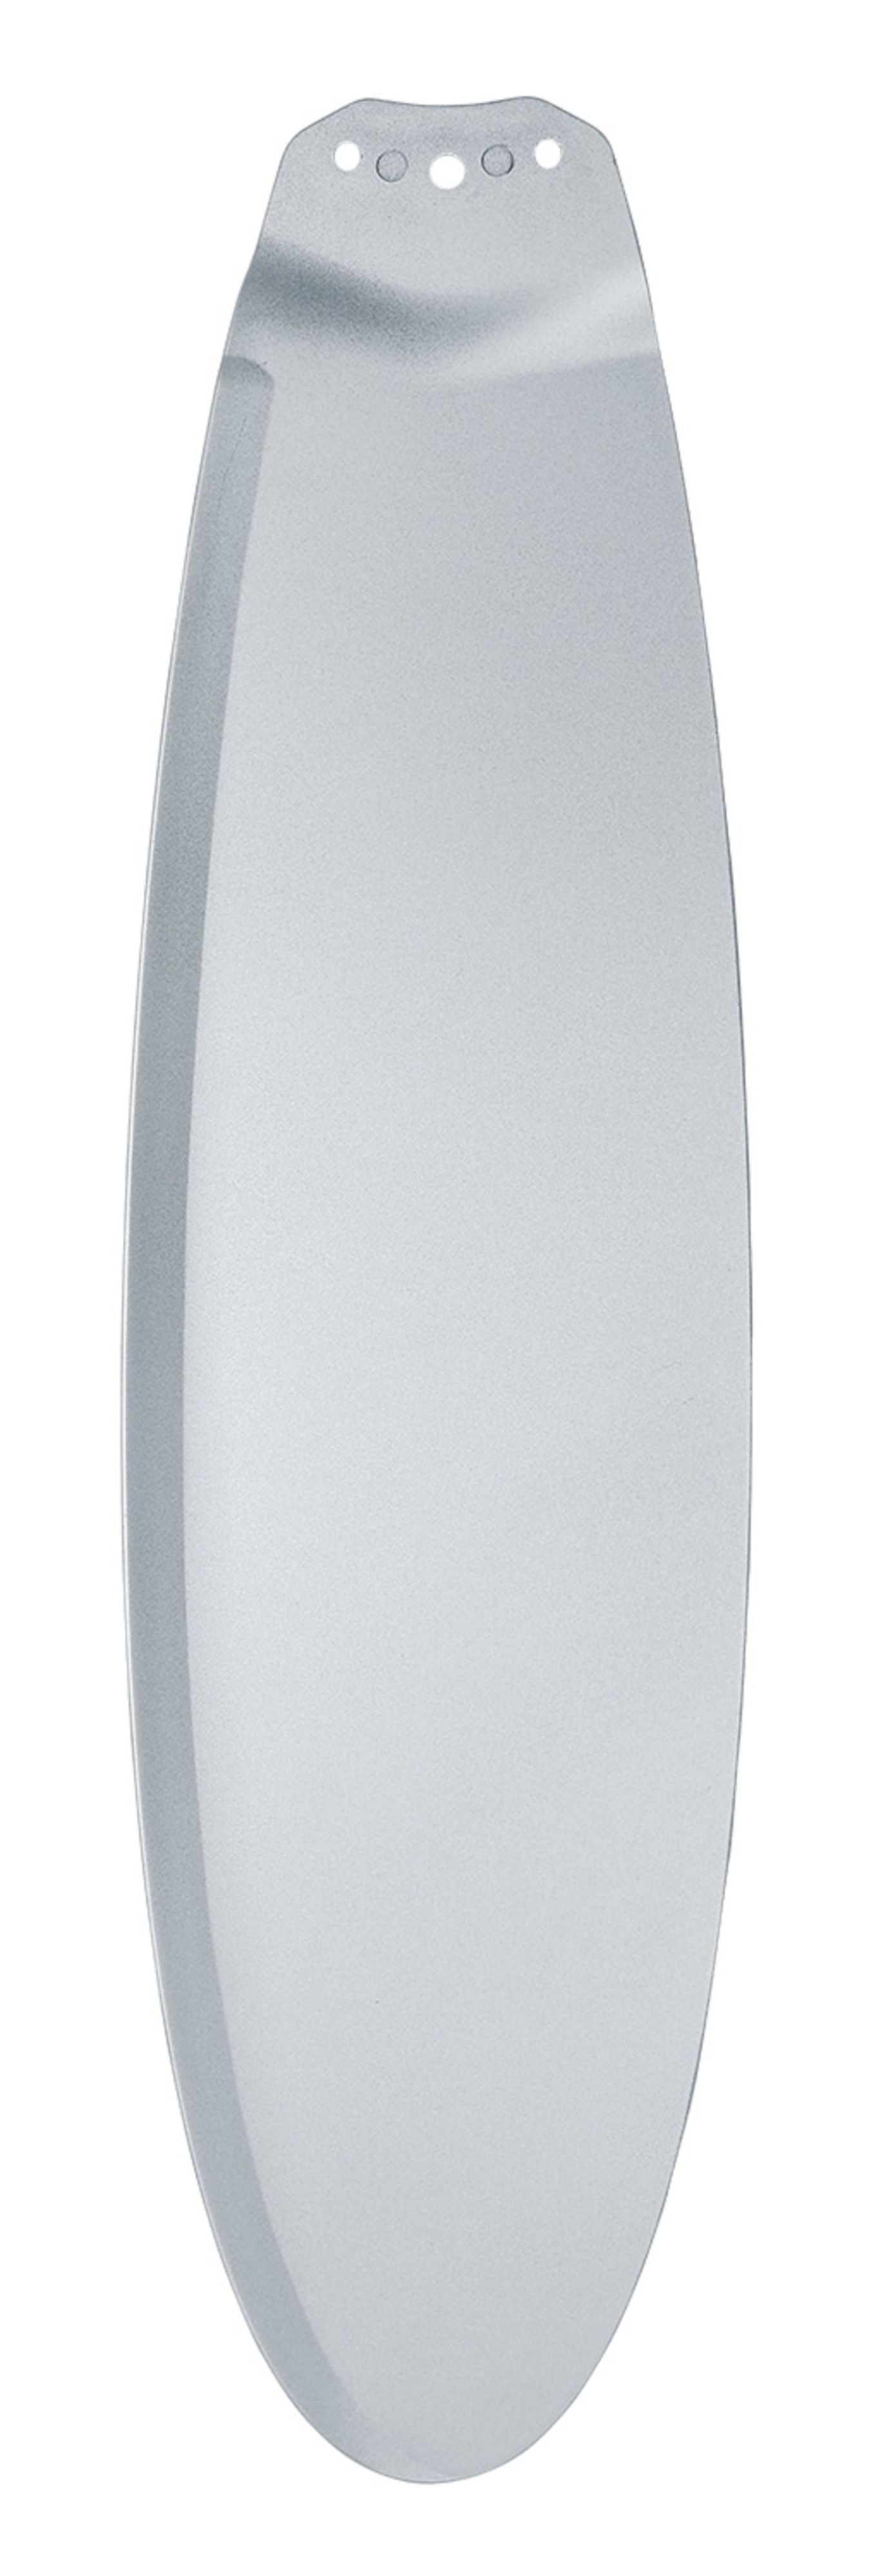 Deckenventilator Silber Grau II LED Eco / Watt) Plano (28 CASAFAN